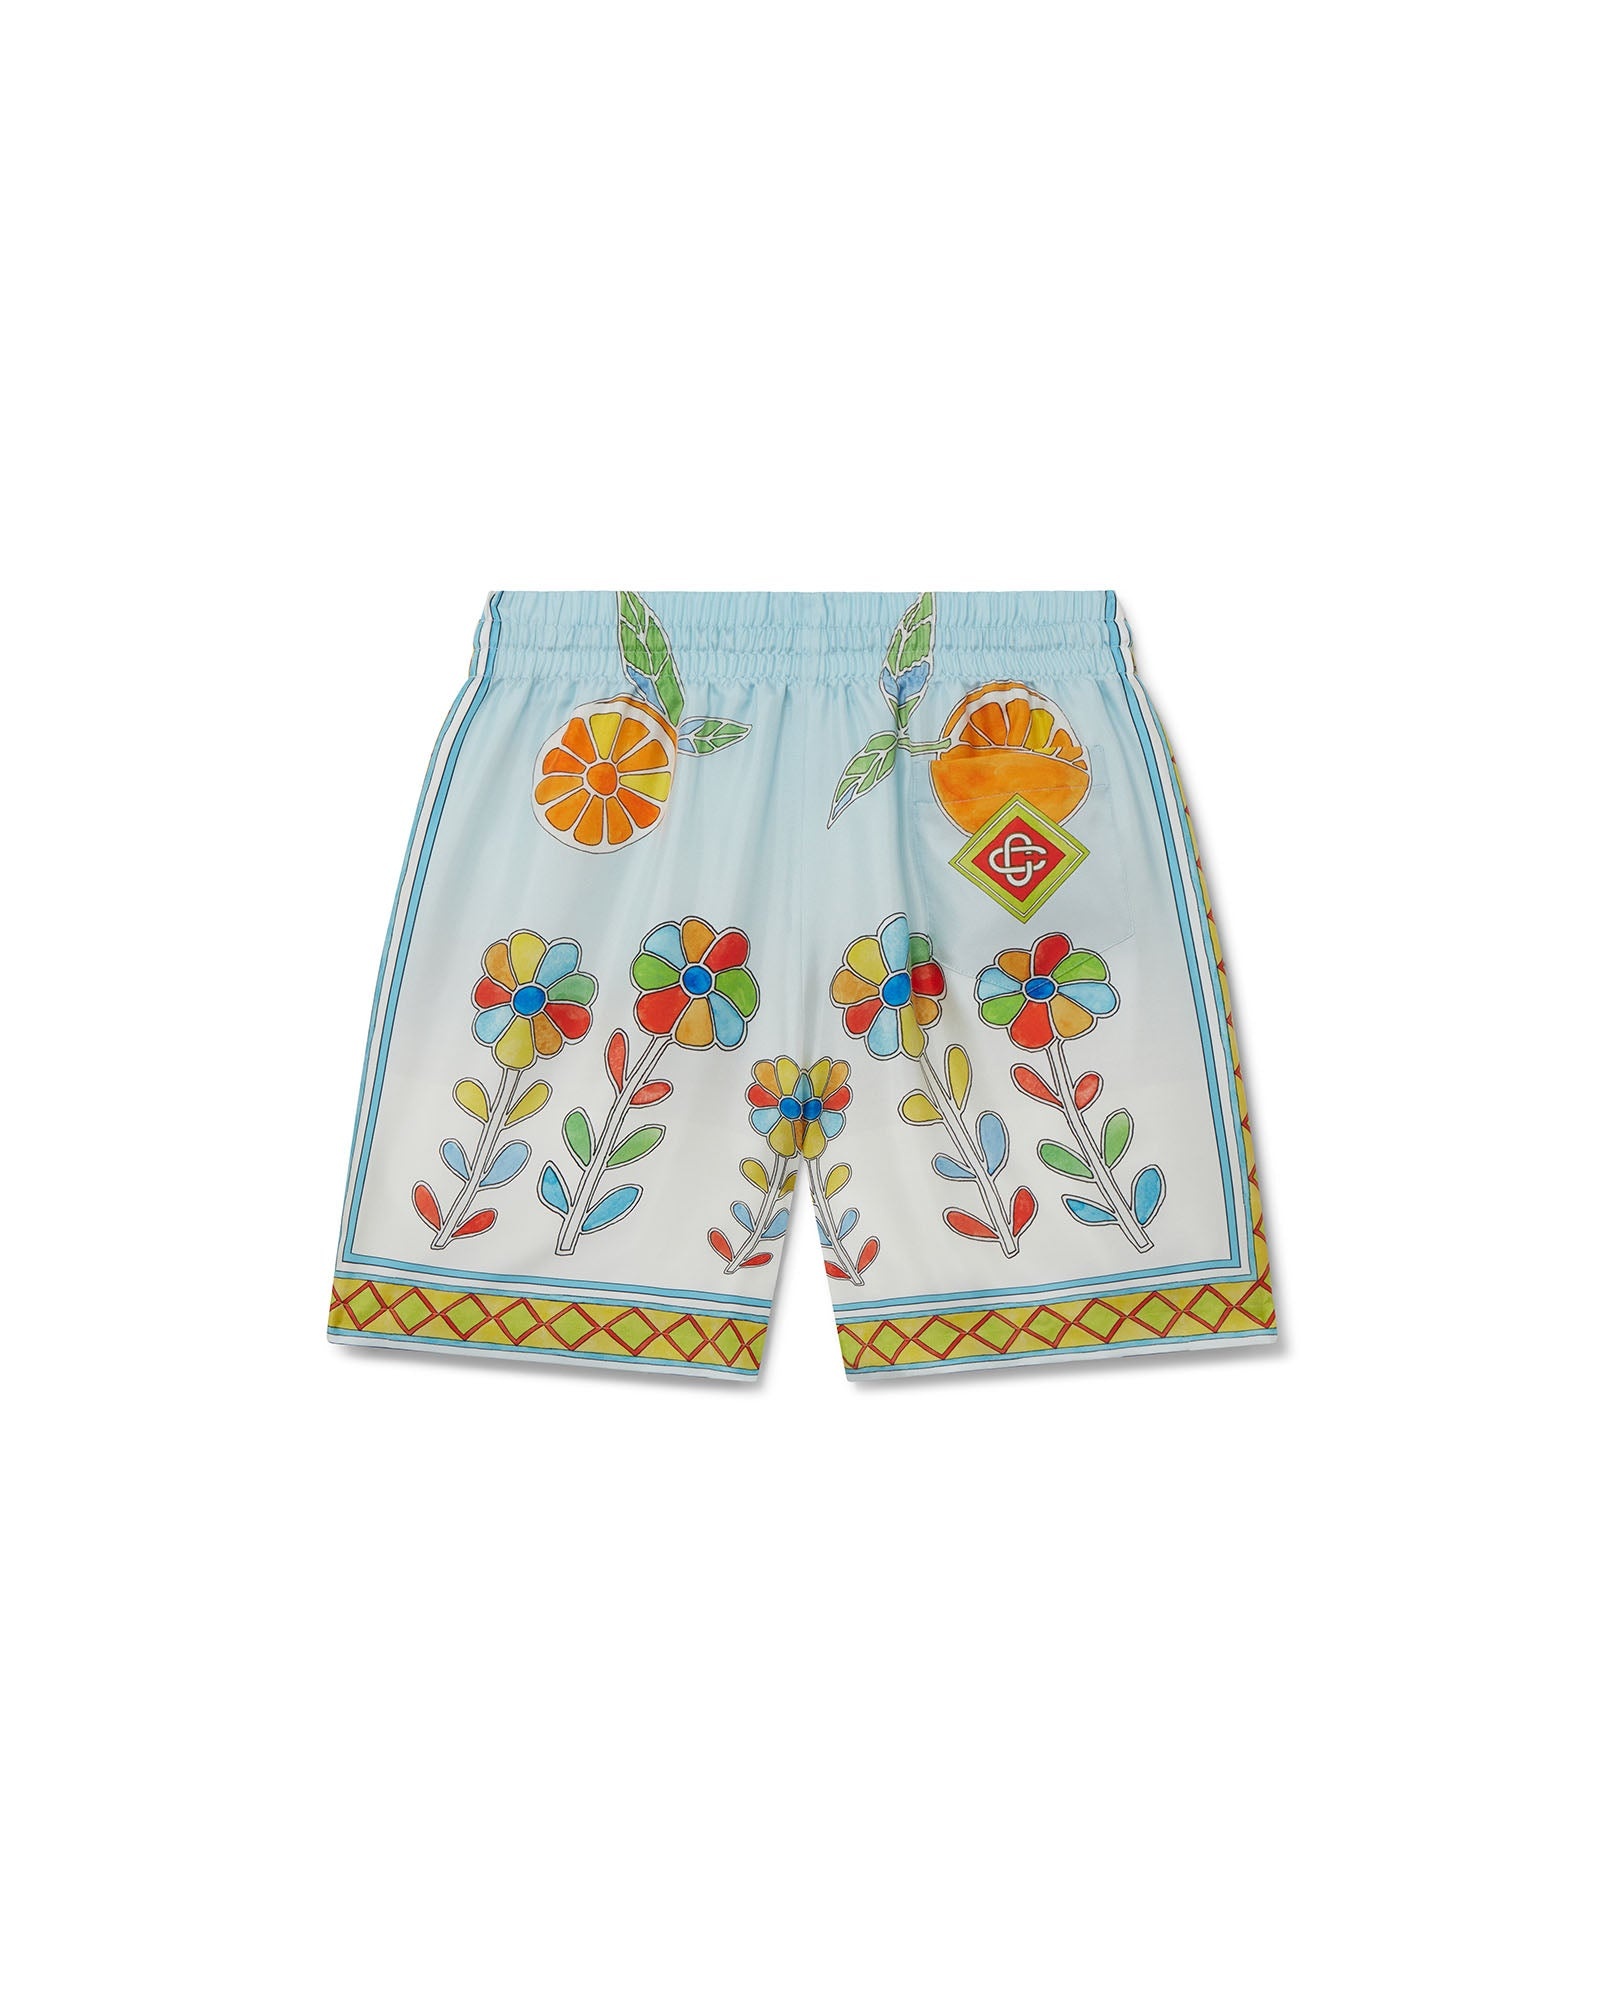 Yoruba Flowers Silk Shorts - 6